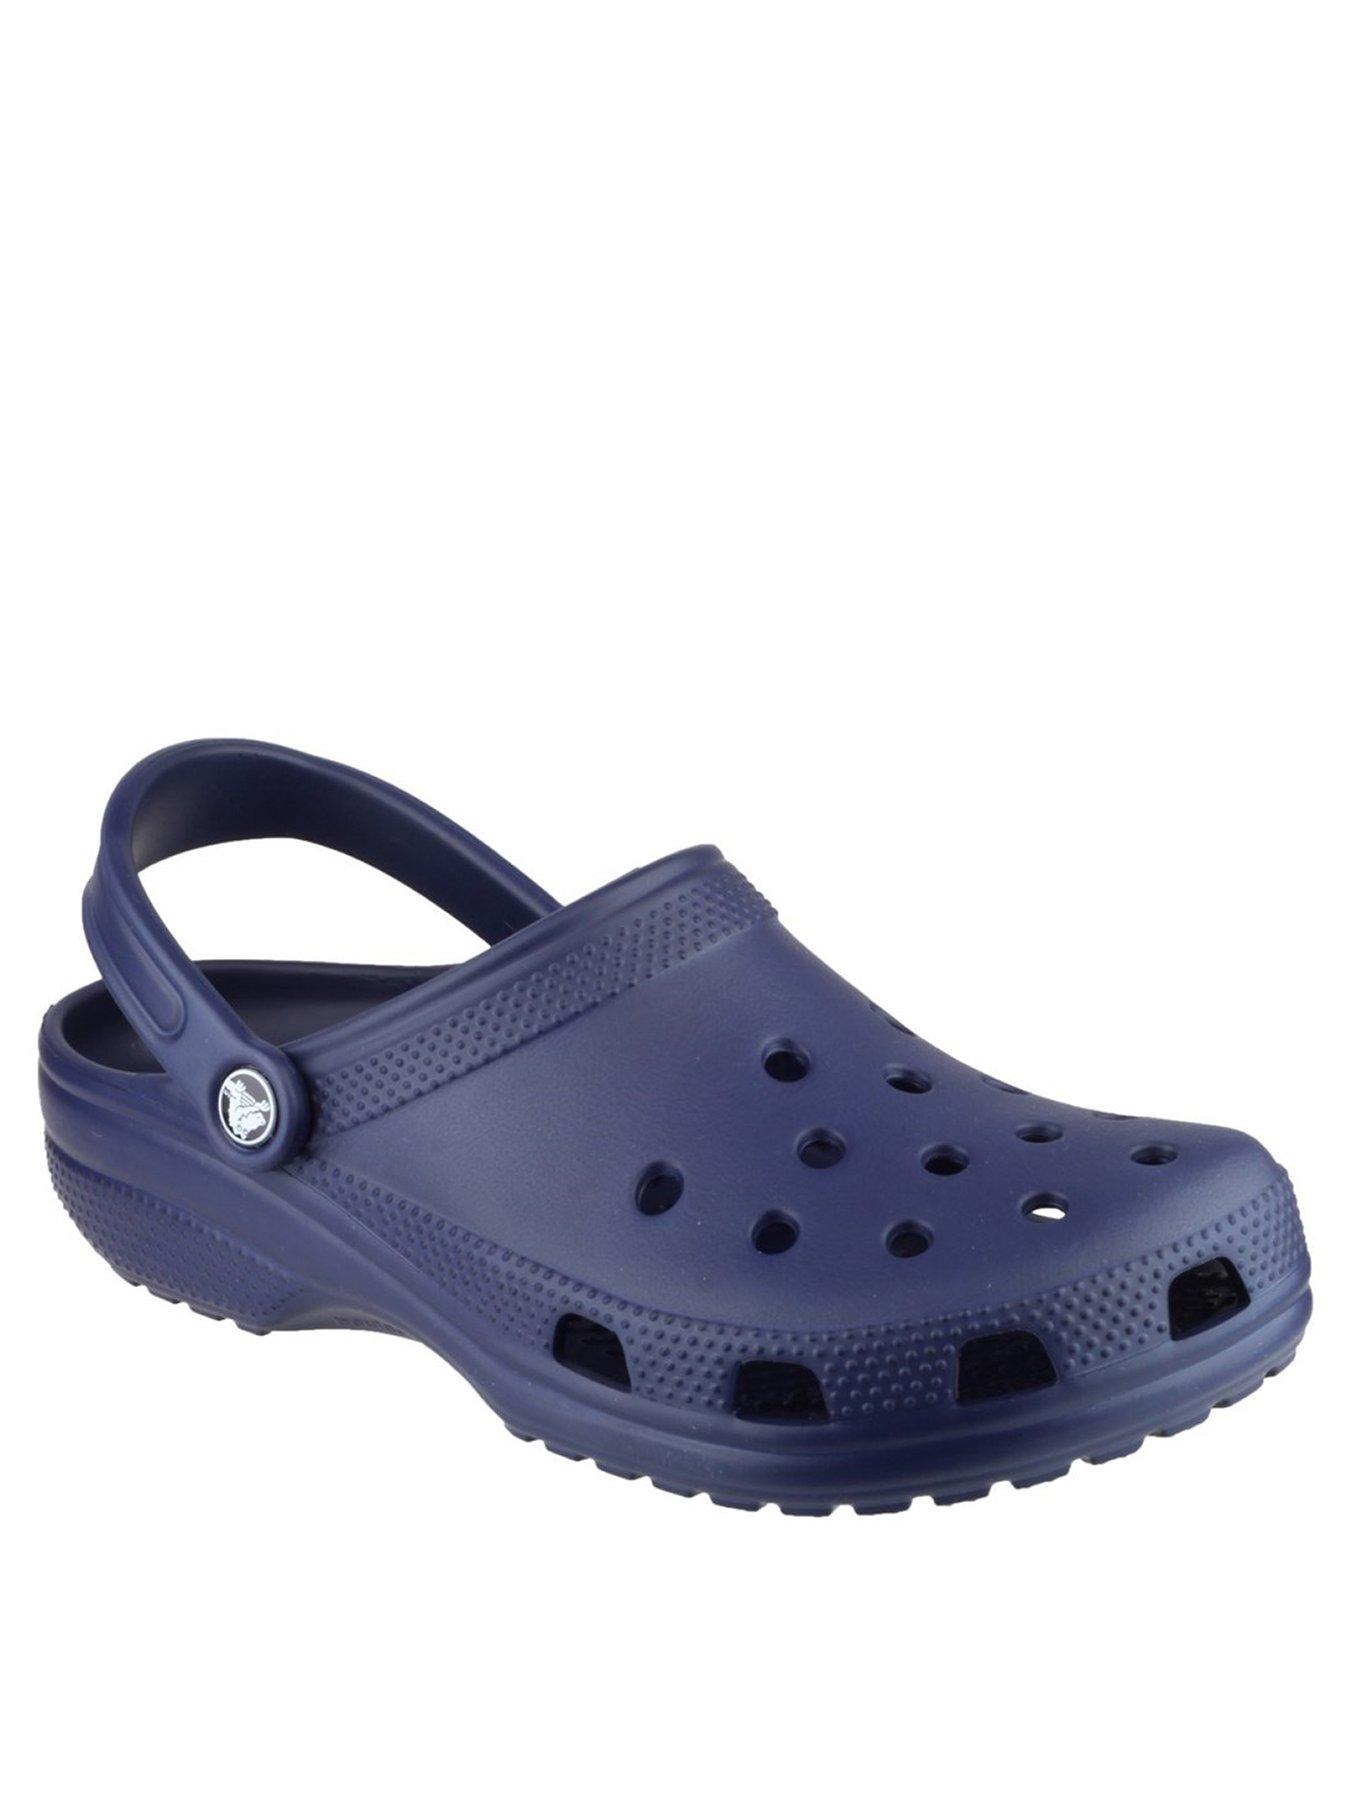 crocs shoes ireland Cheaper Than Retail 